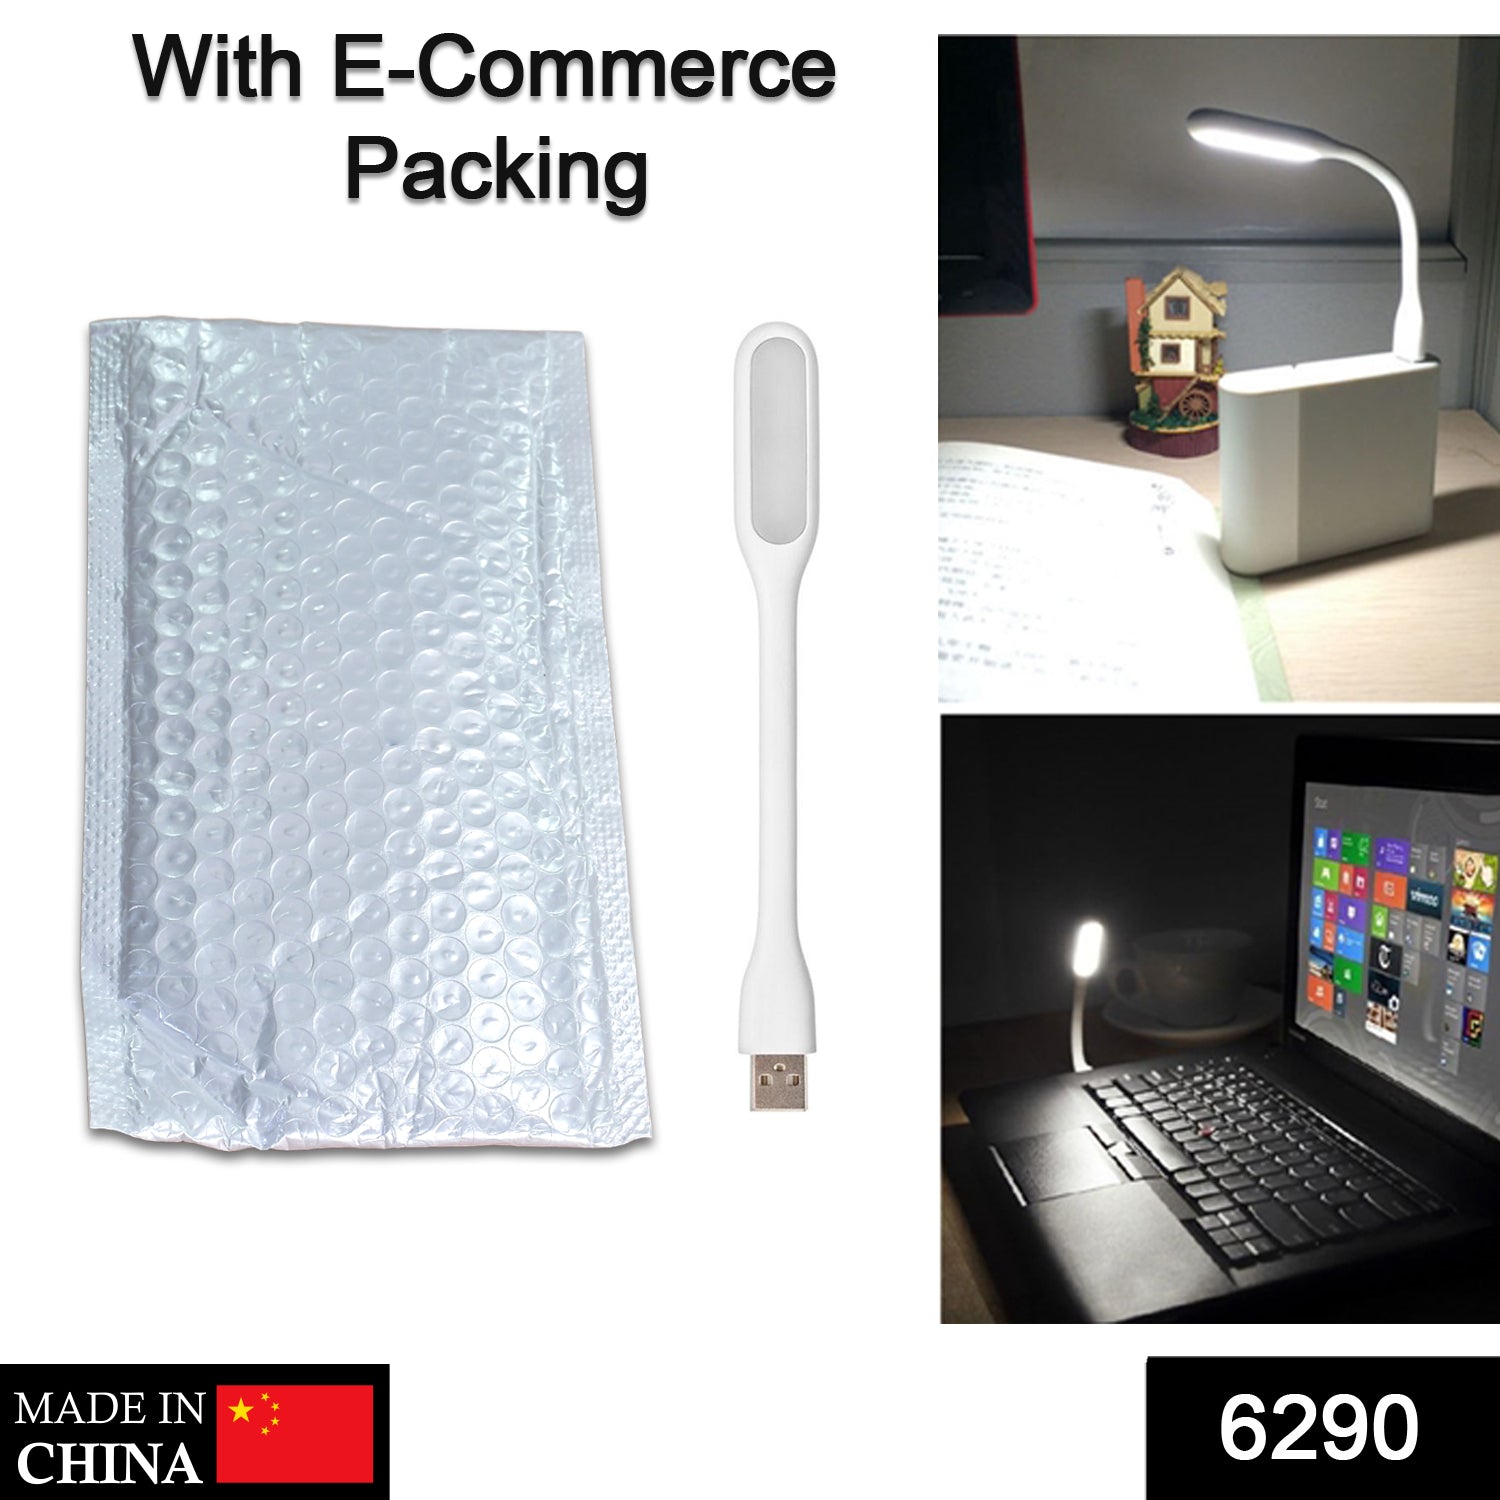 6290 USB LED Light Lamp With E Commerce Packing 